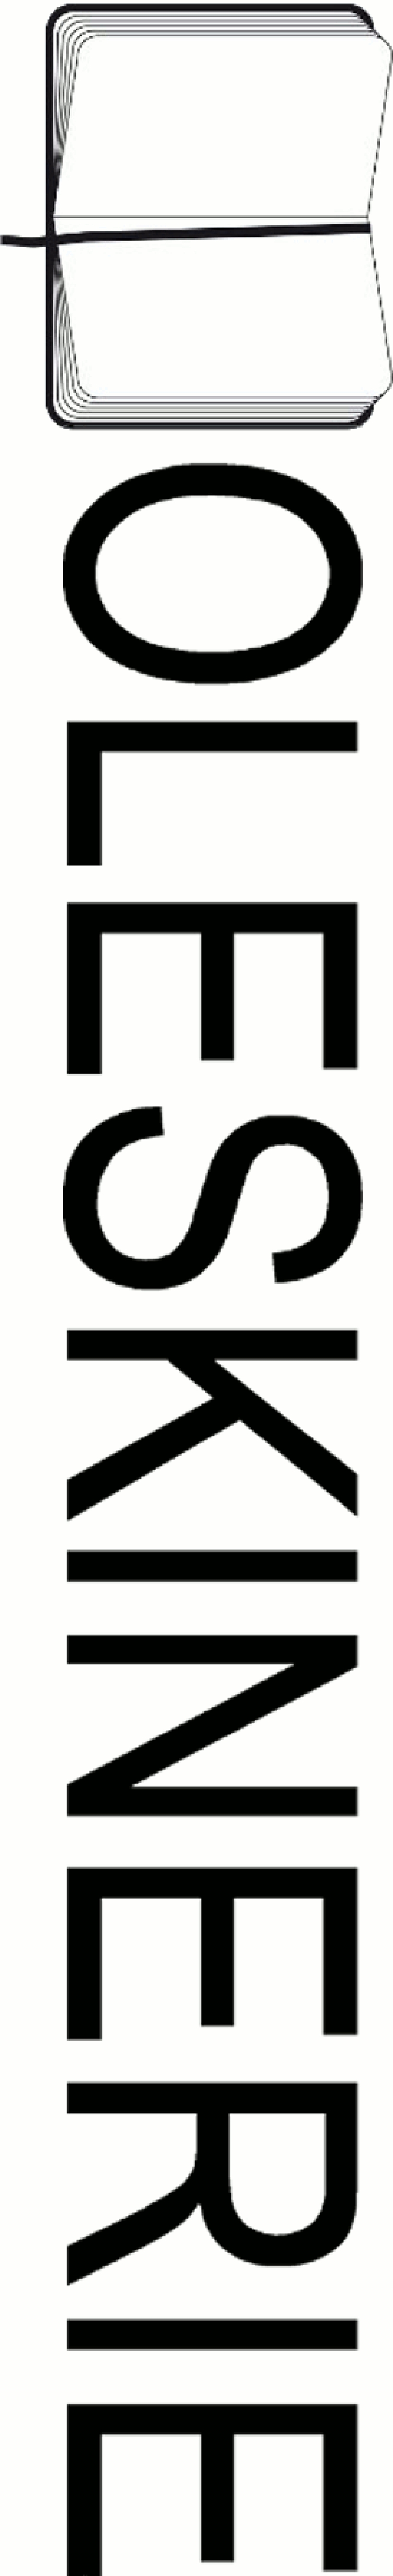 The M logo